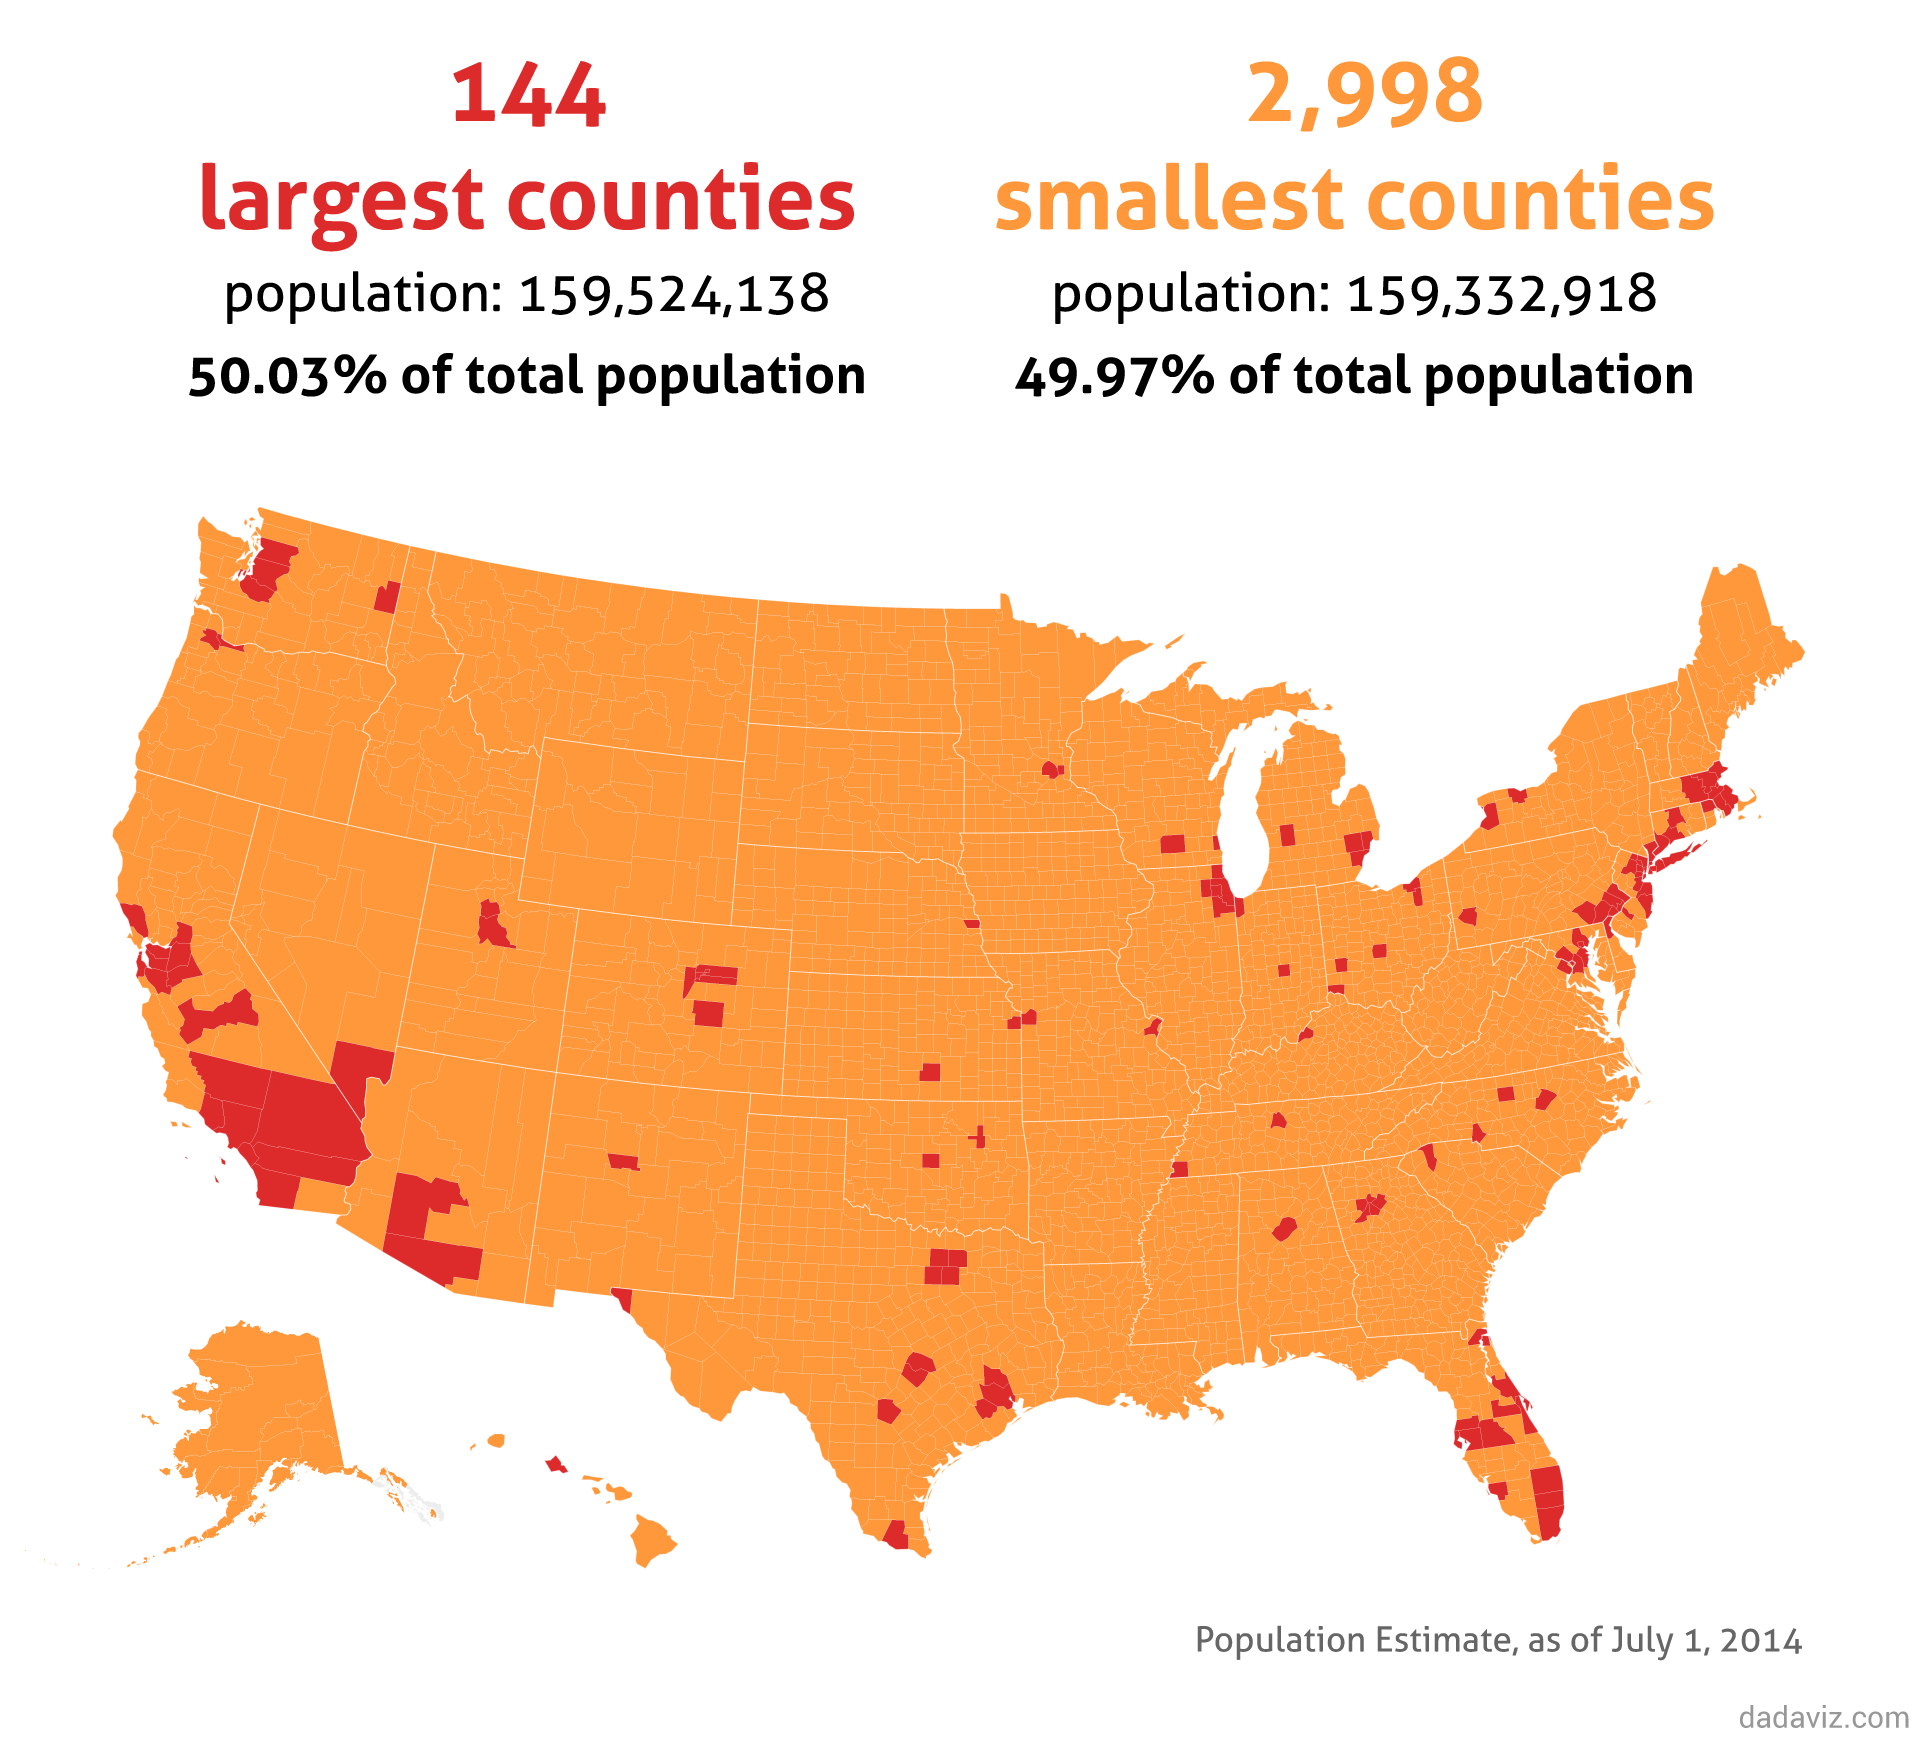 U.S. Population Projections: 2005-2050